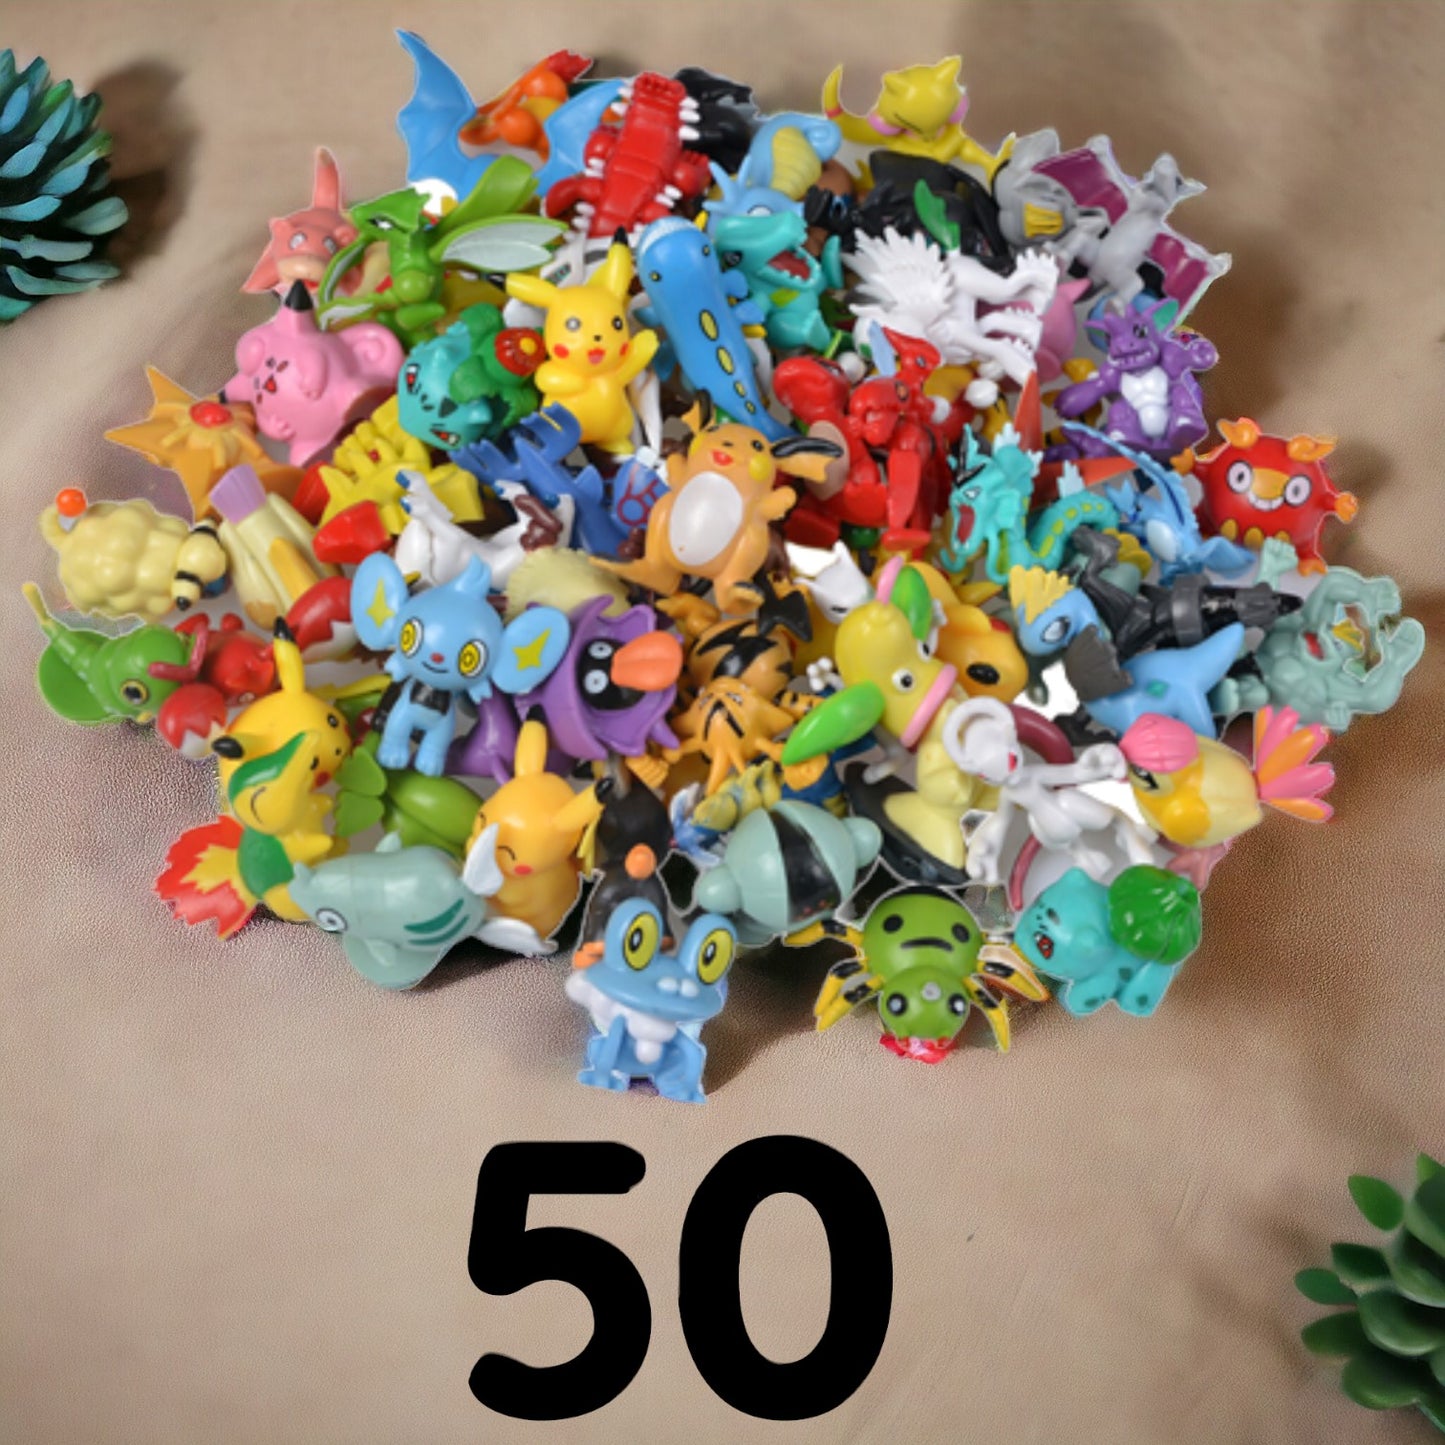 Lot of Pokémon figurines (4 to 6cm)